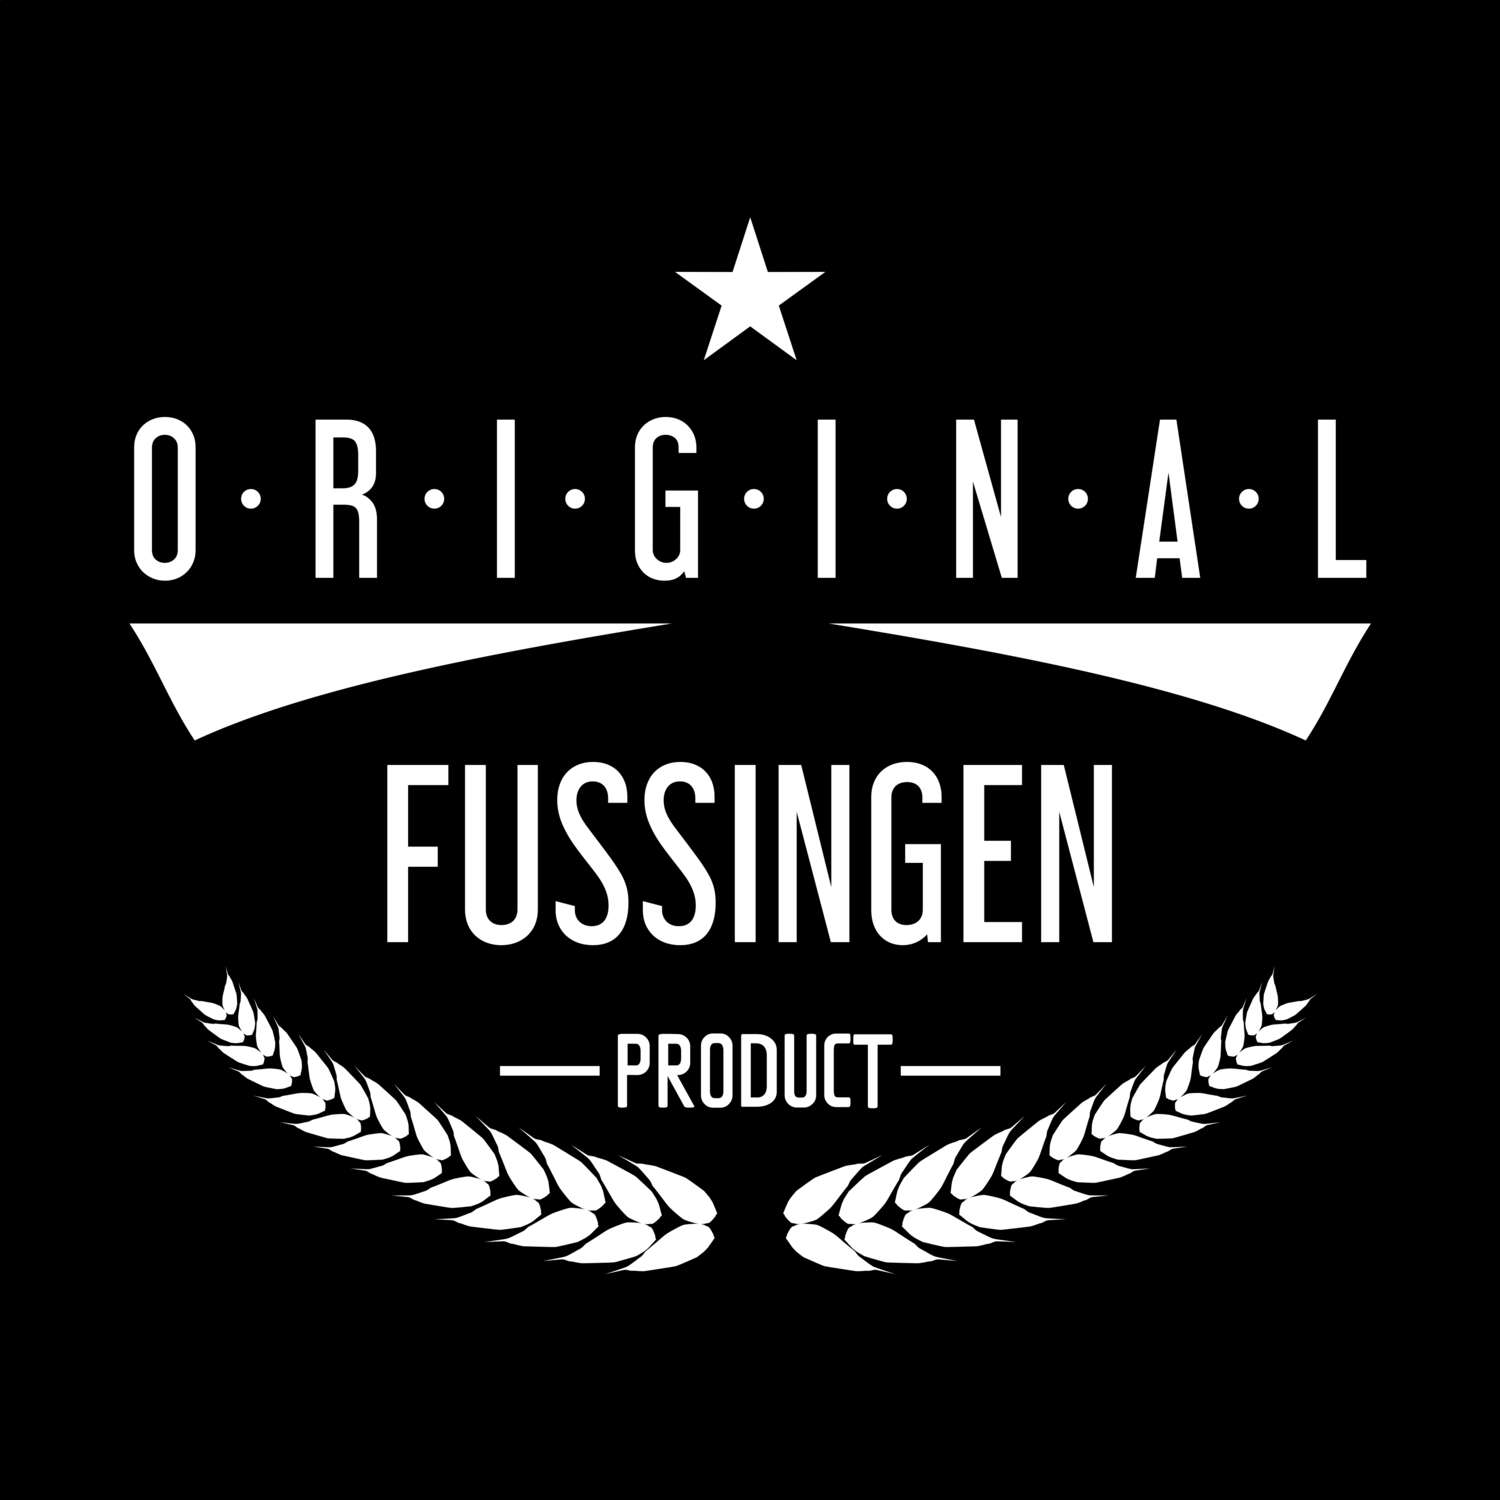 Fussingen T-Shirt »Original Product«